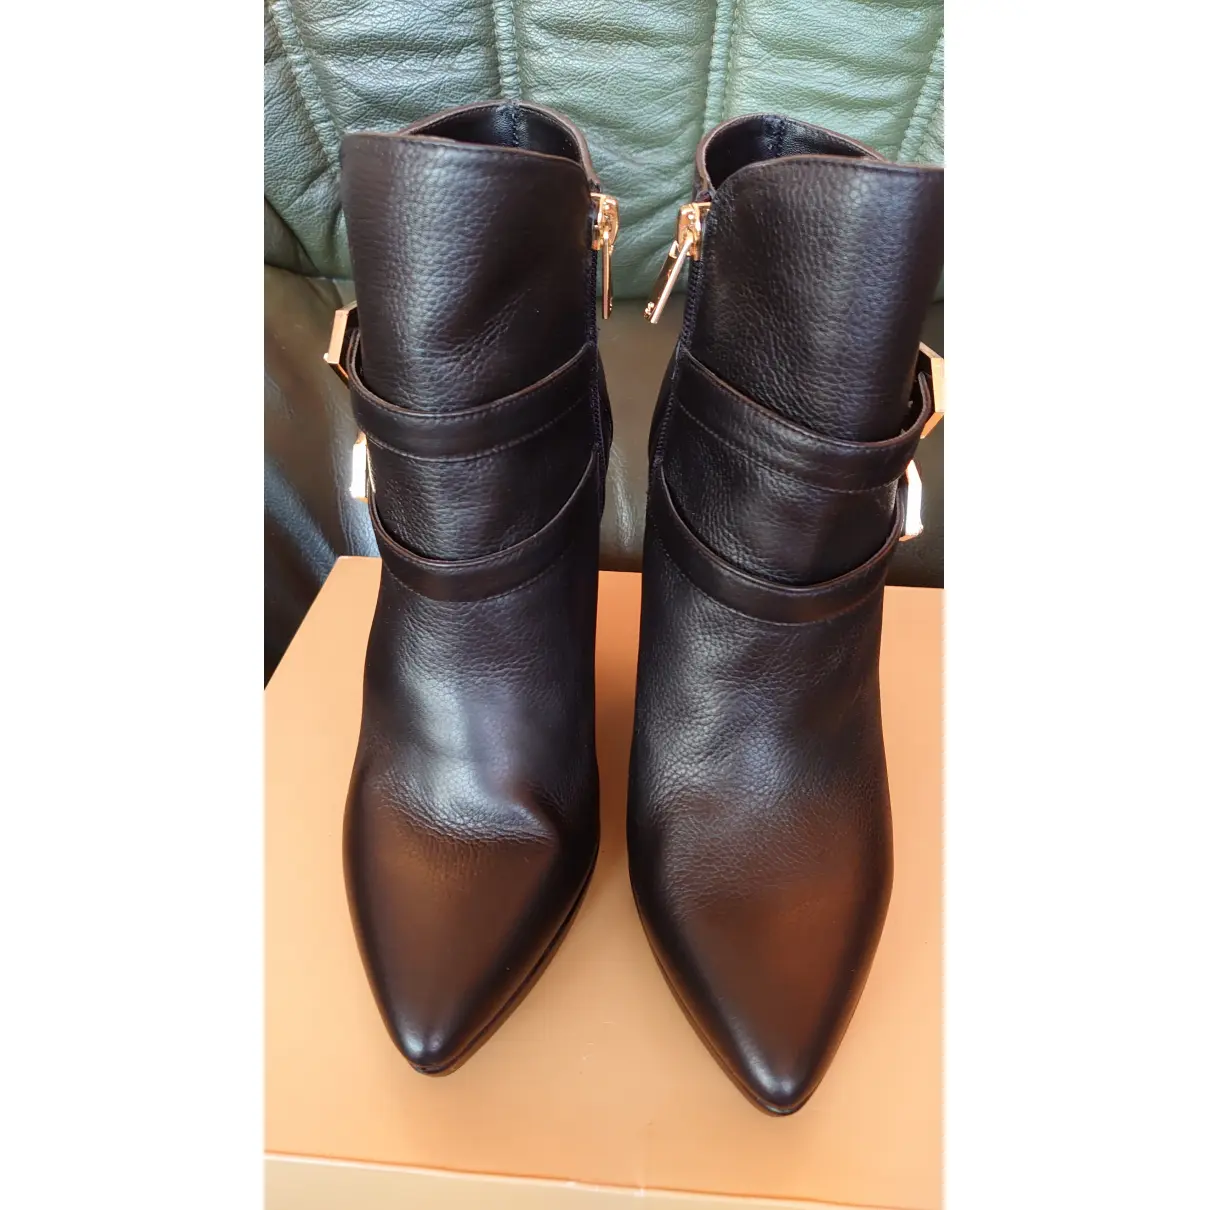 Buy Supertrash Leather ankle boots online